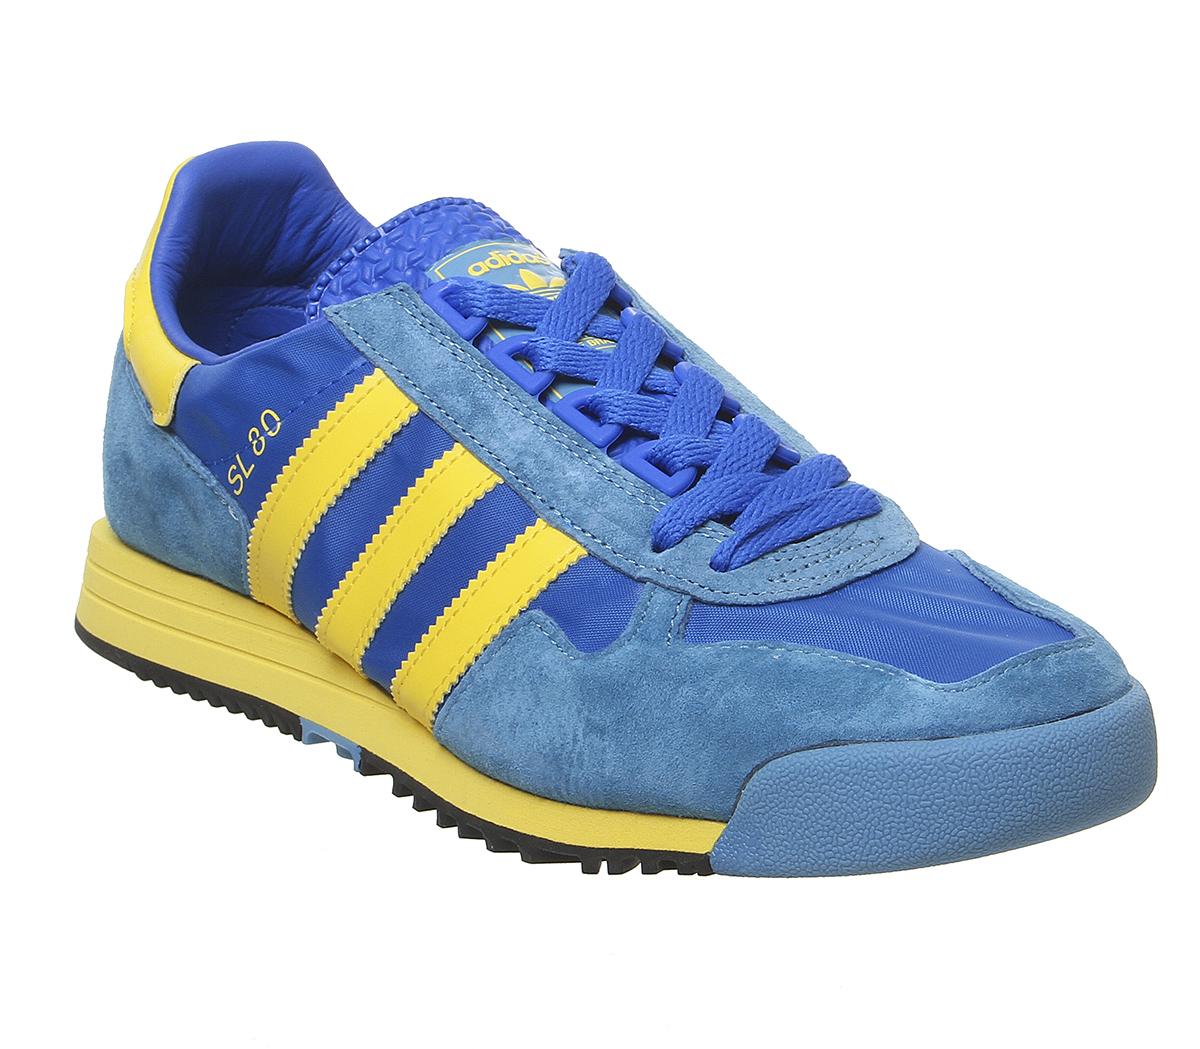 adidas sl80 blue yellow size 10